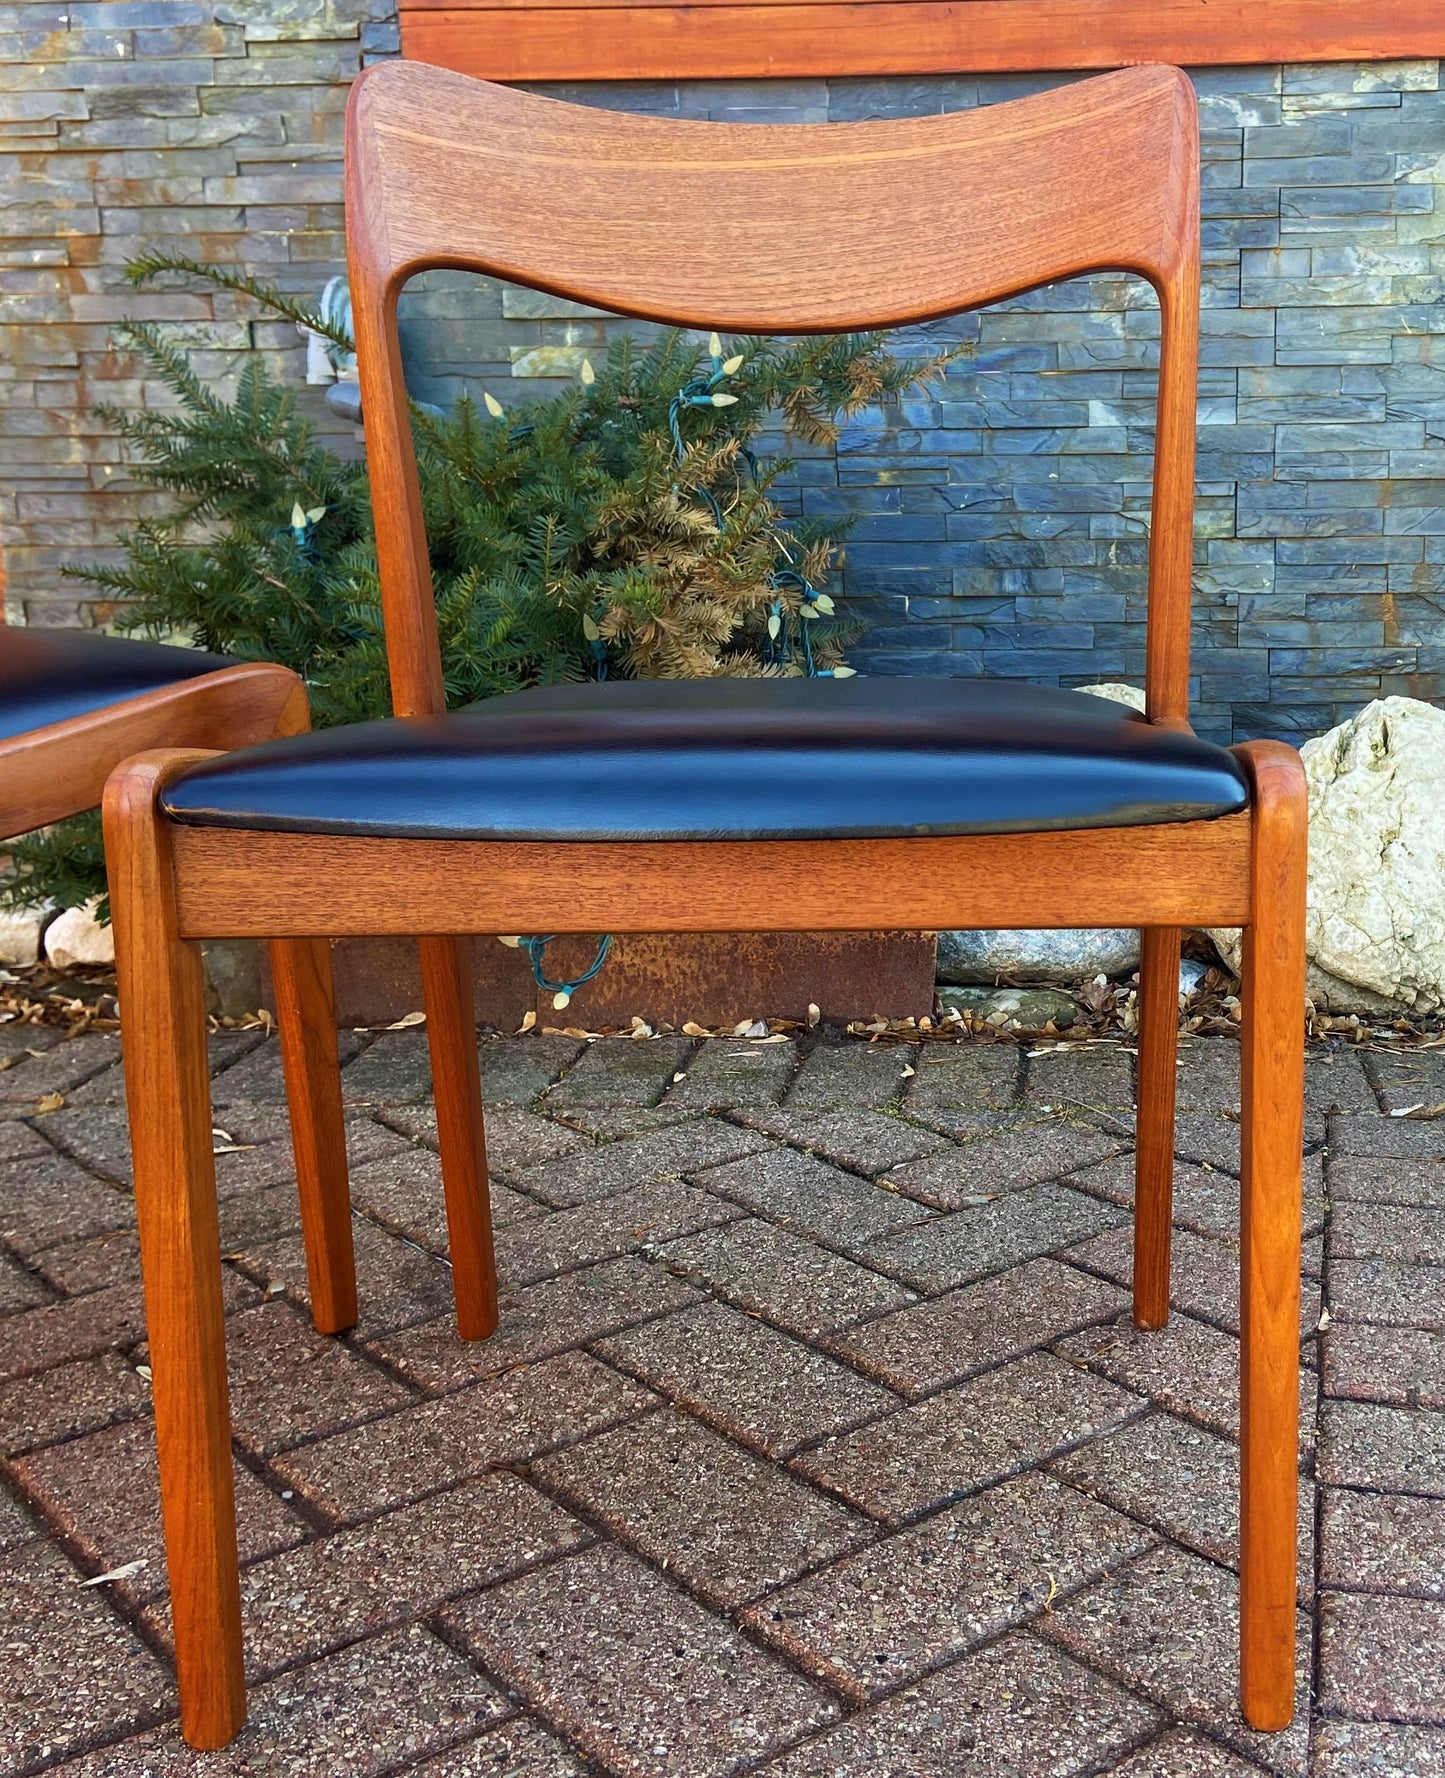 4 RESTORED Danish Mid Century Modern Teak Chairs, Moller style